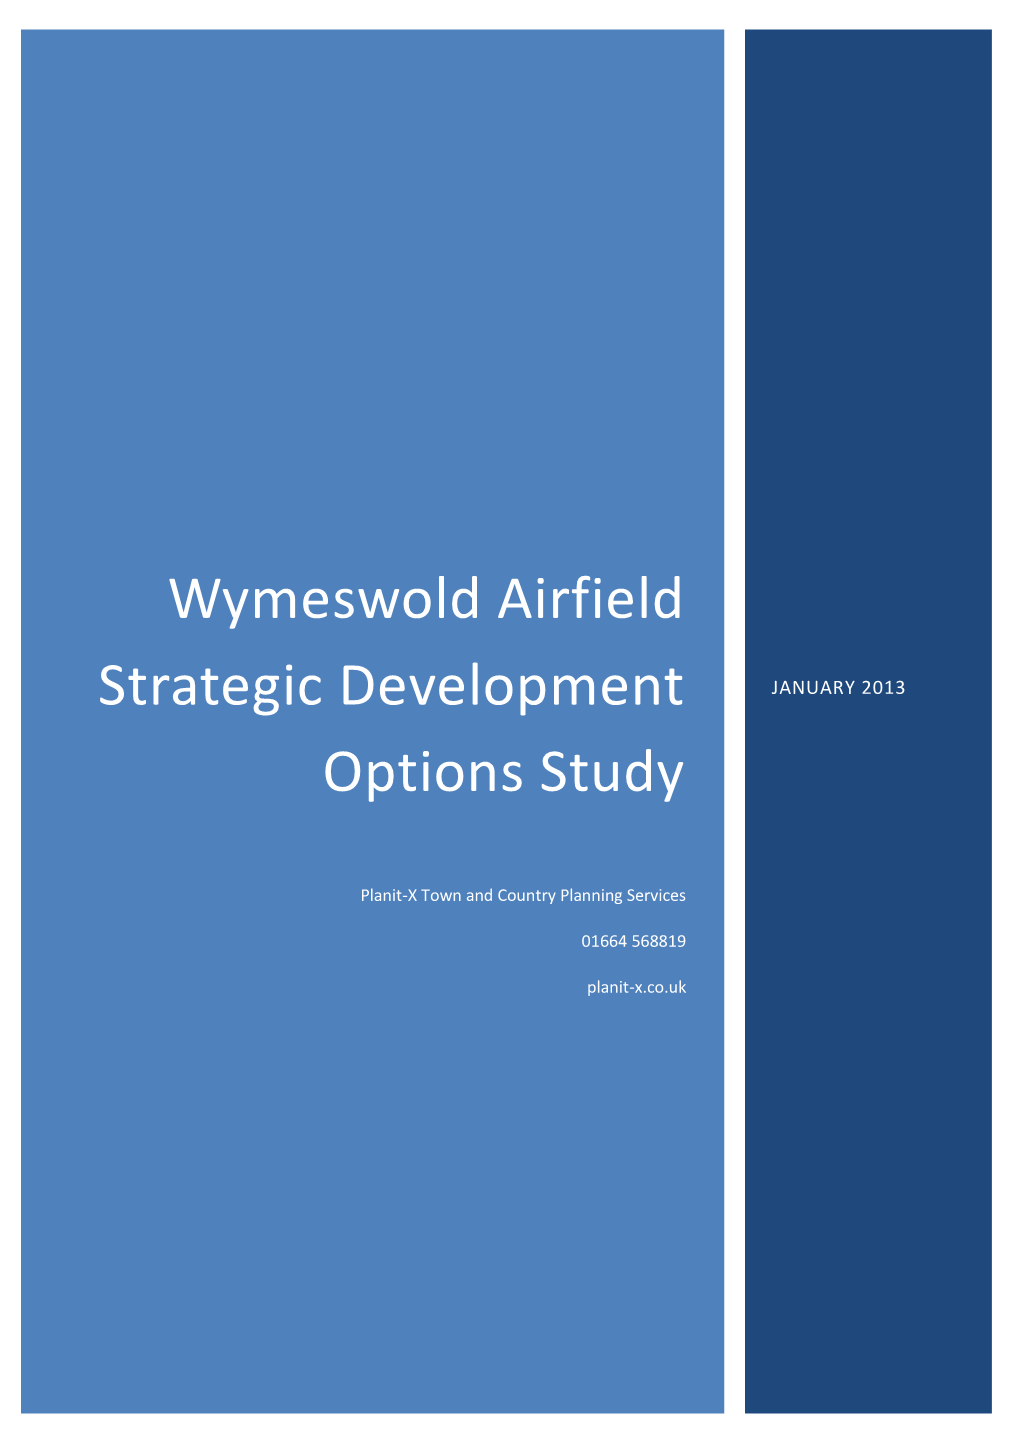 Wymeswold Airfield Strategic Development Options Study